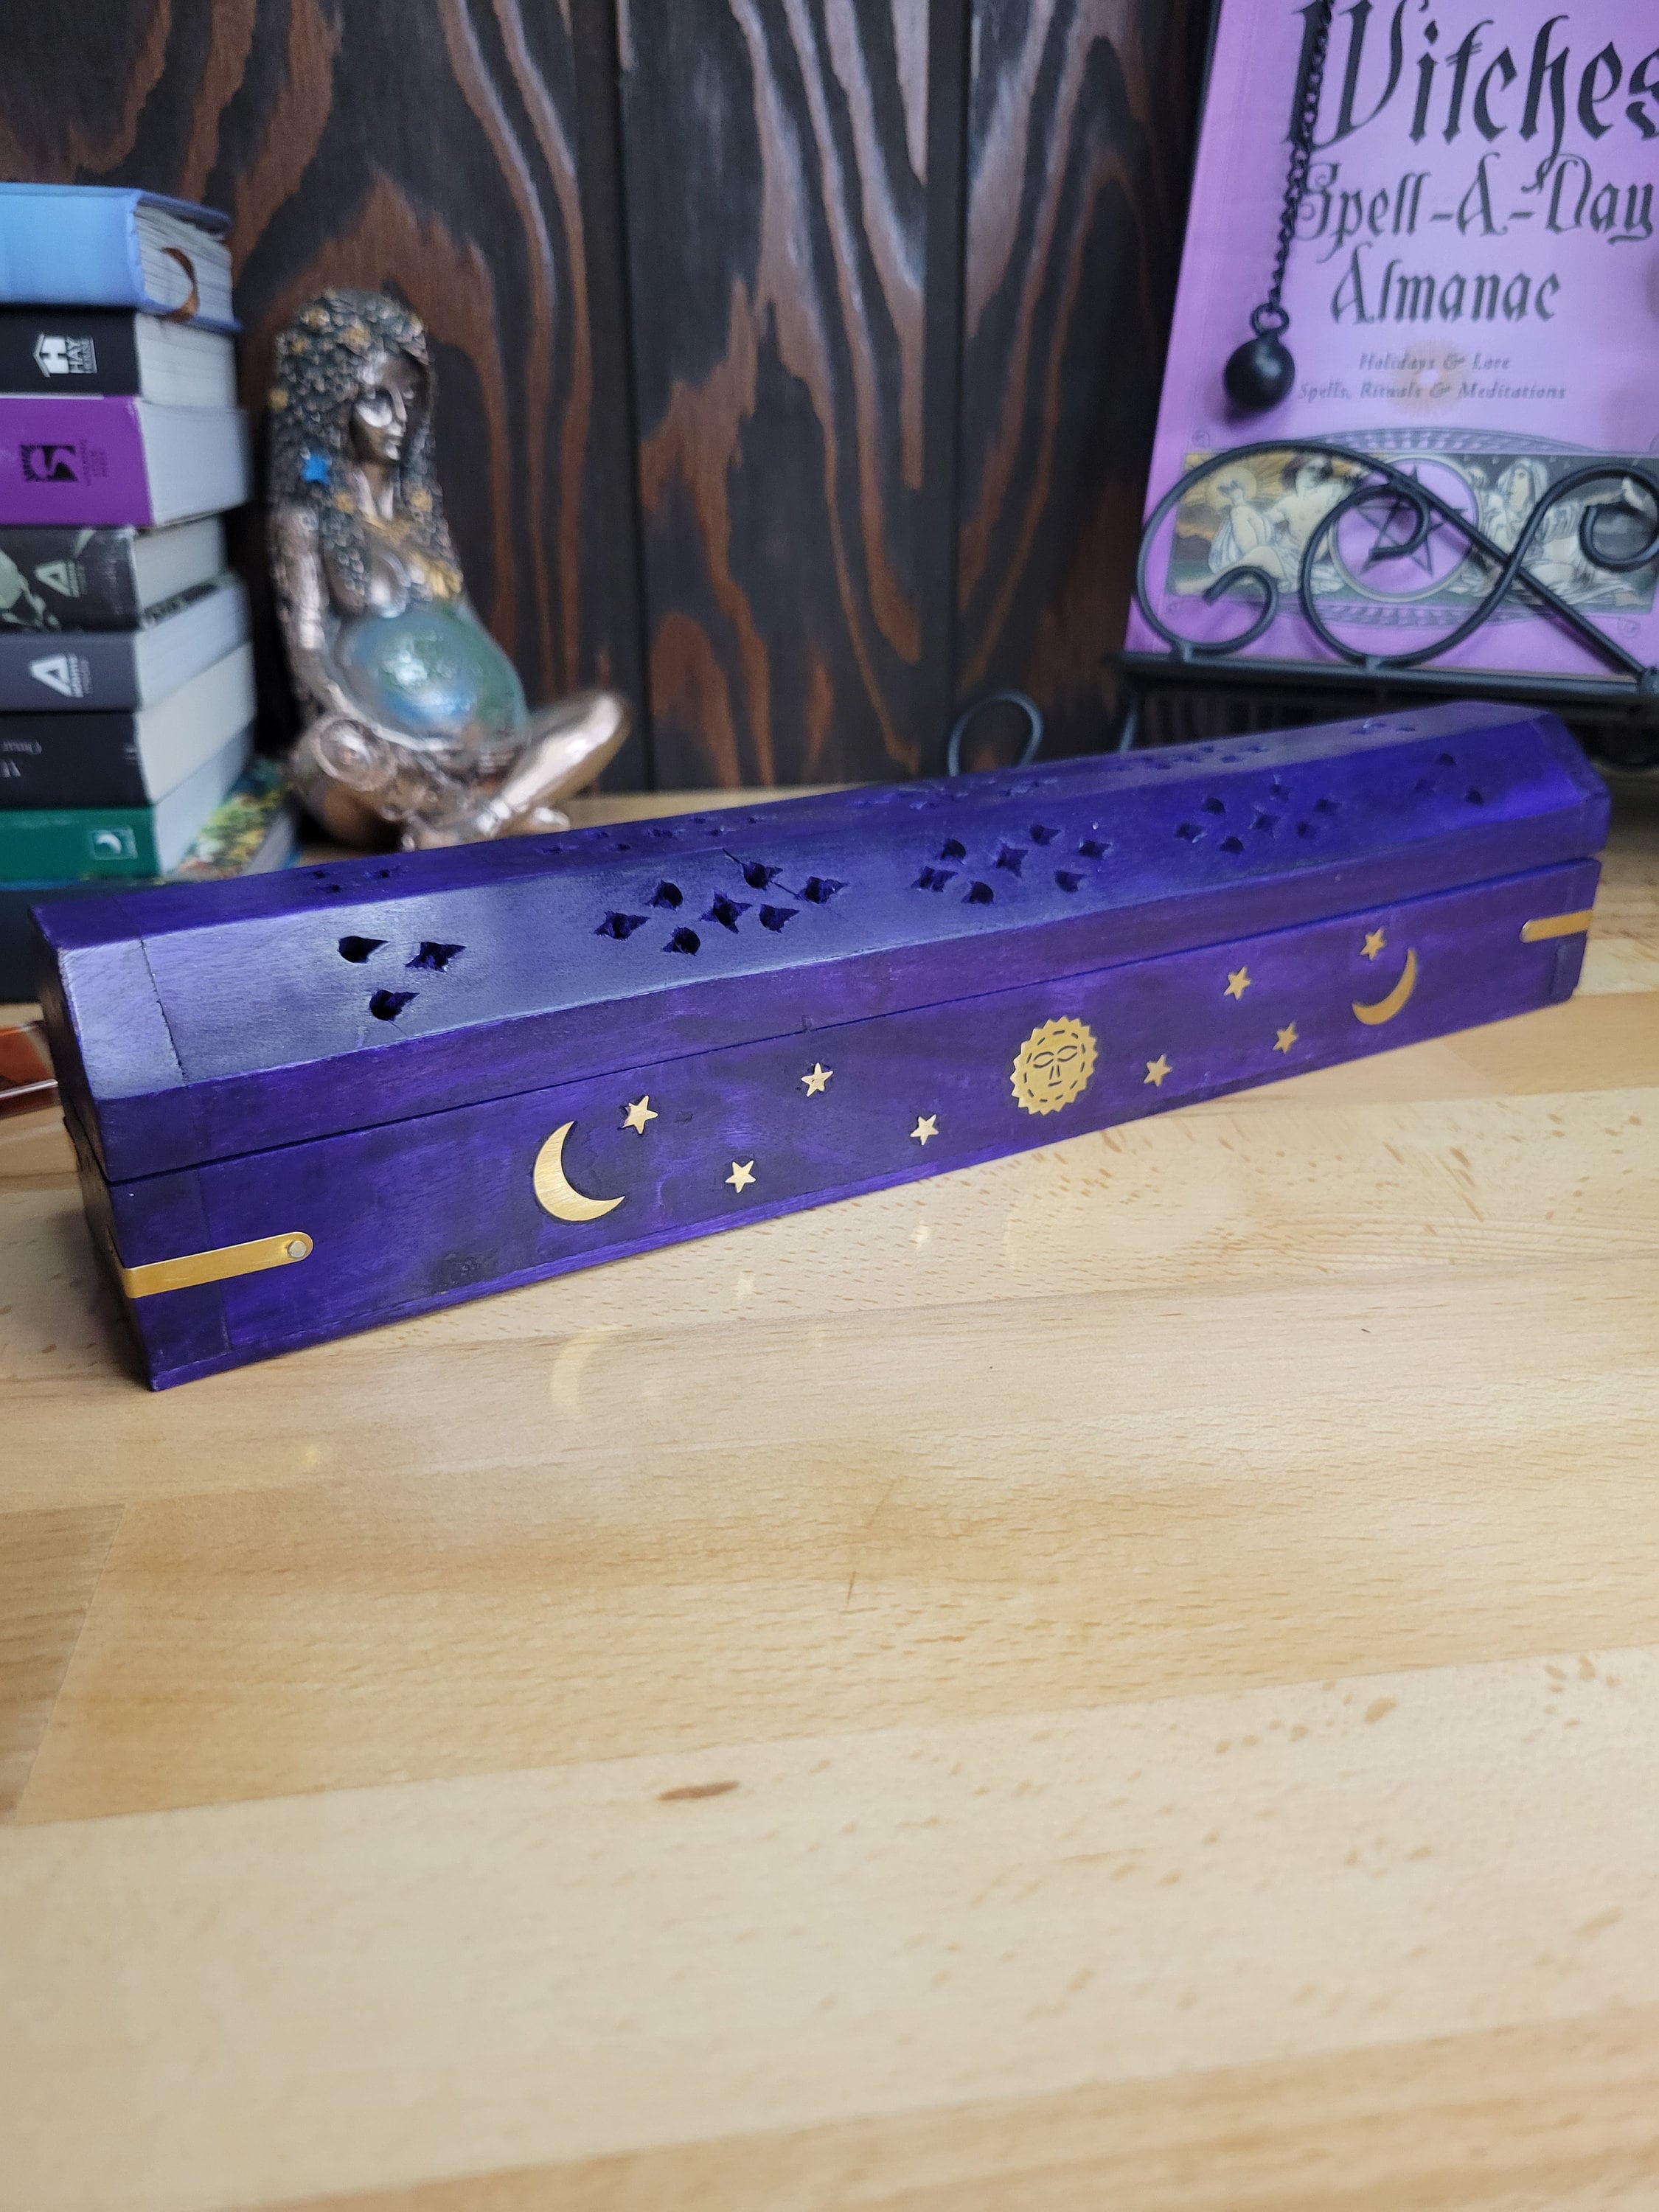 20pcs Paper Case Stick Incense Storage Box Handmade Line Incense